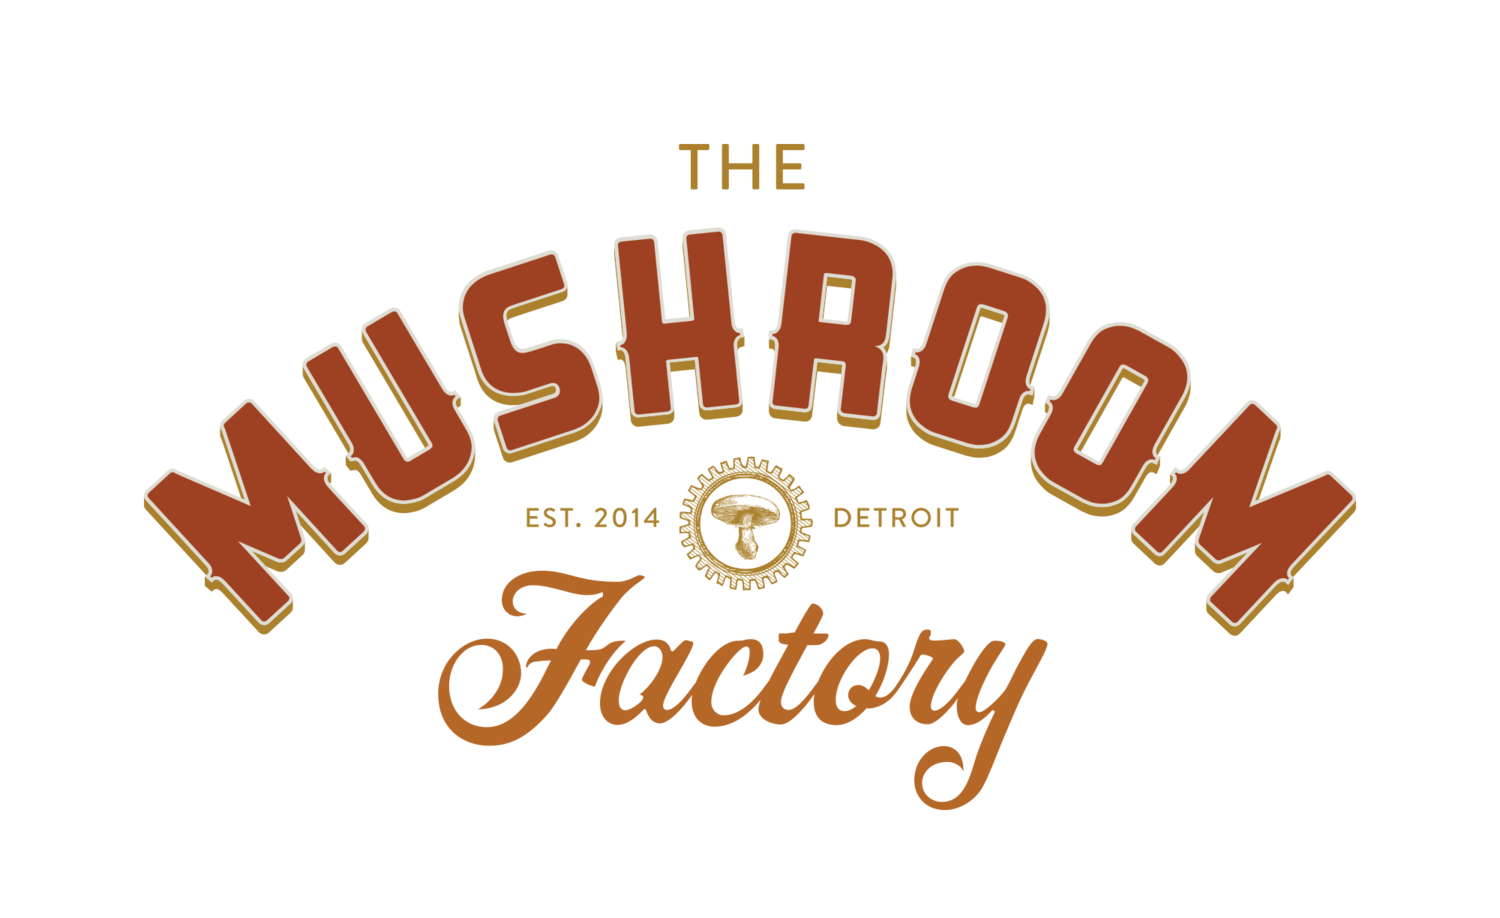 The Mushroom Factory